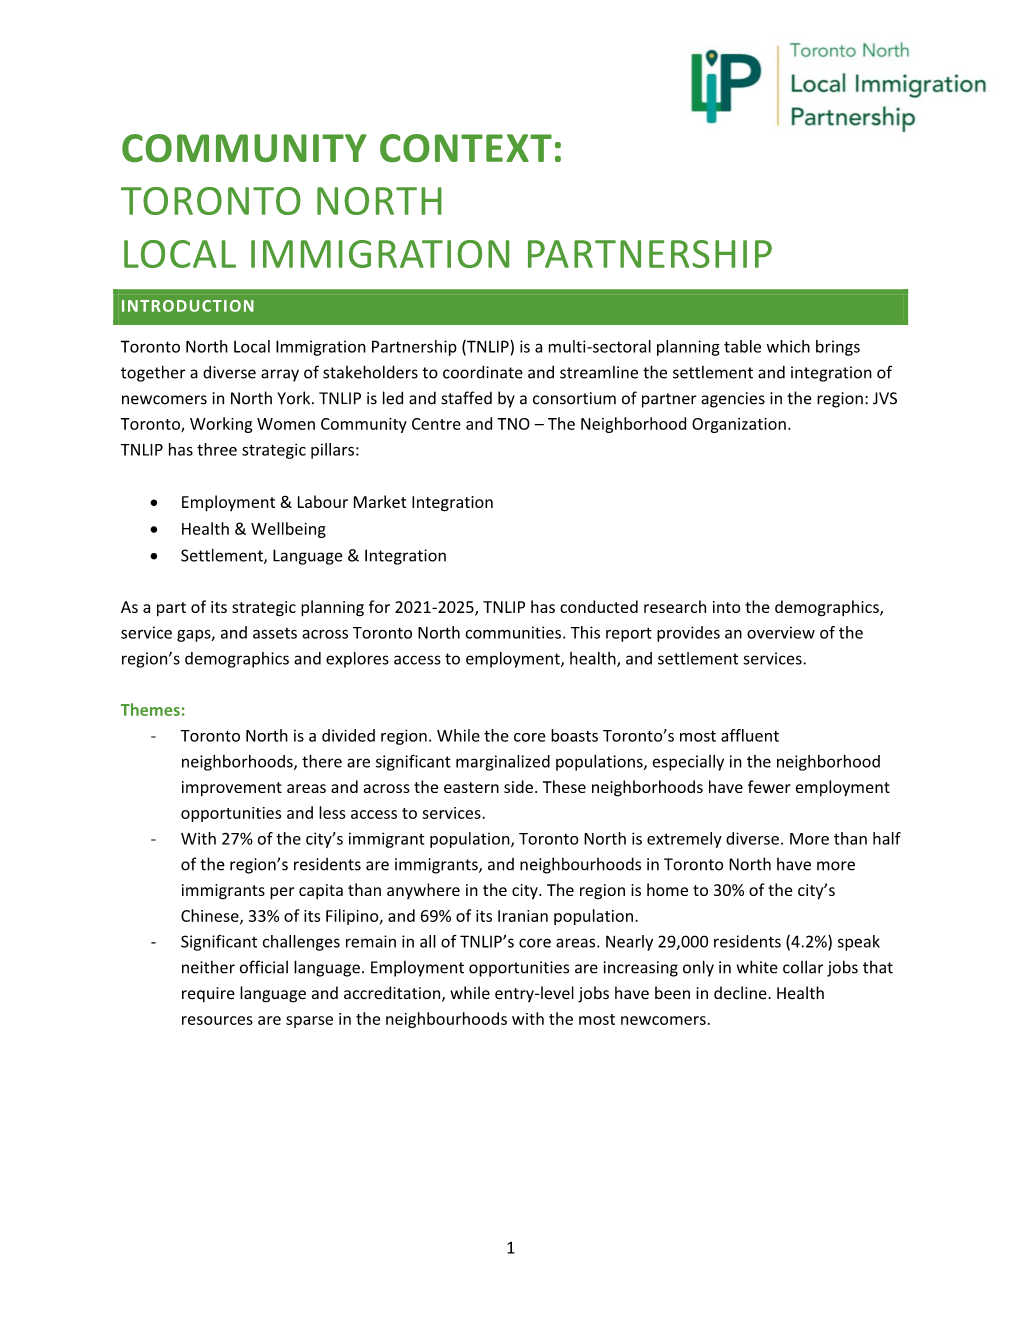 Community Context: Toronto North Local Immigration Partnership